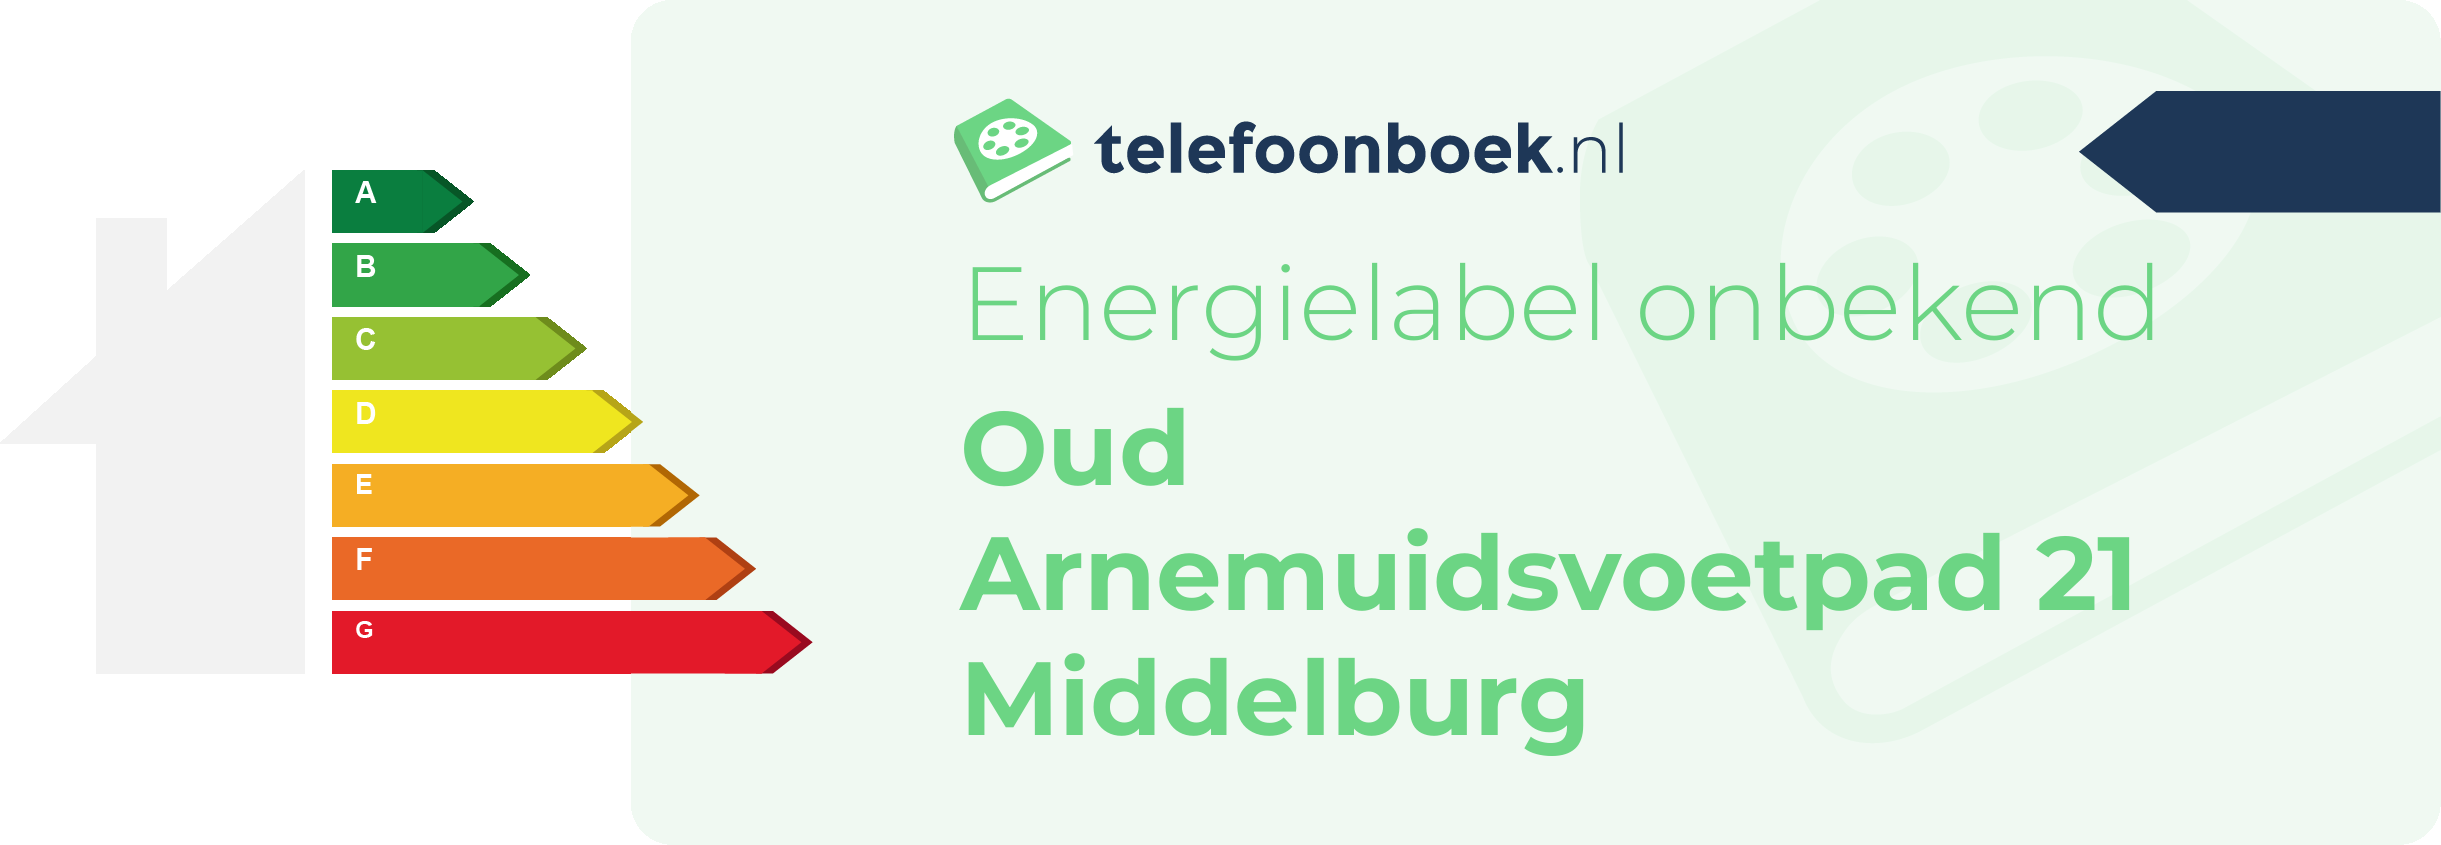 Energielabel Oud Arnemuidsvoetpad 21 Middelburg